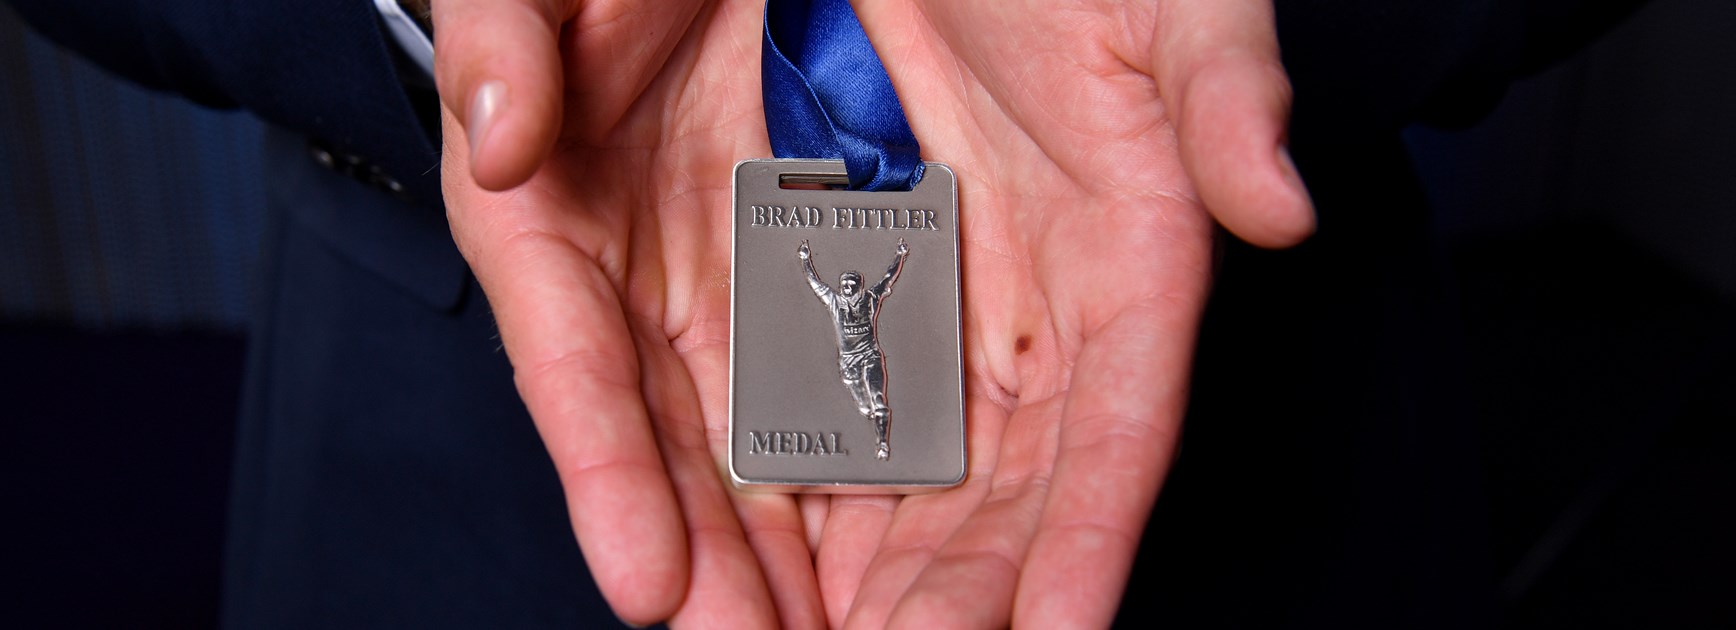 Trbojevic caps remarkable season with Brad Fittler Medal